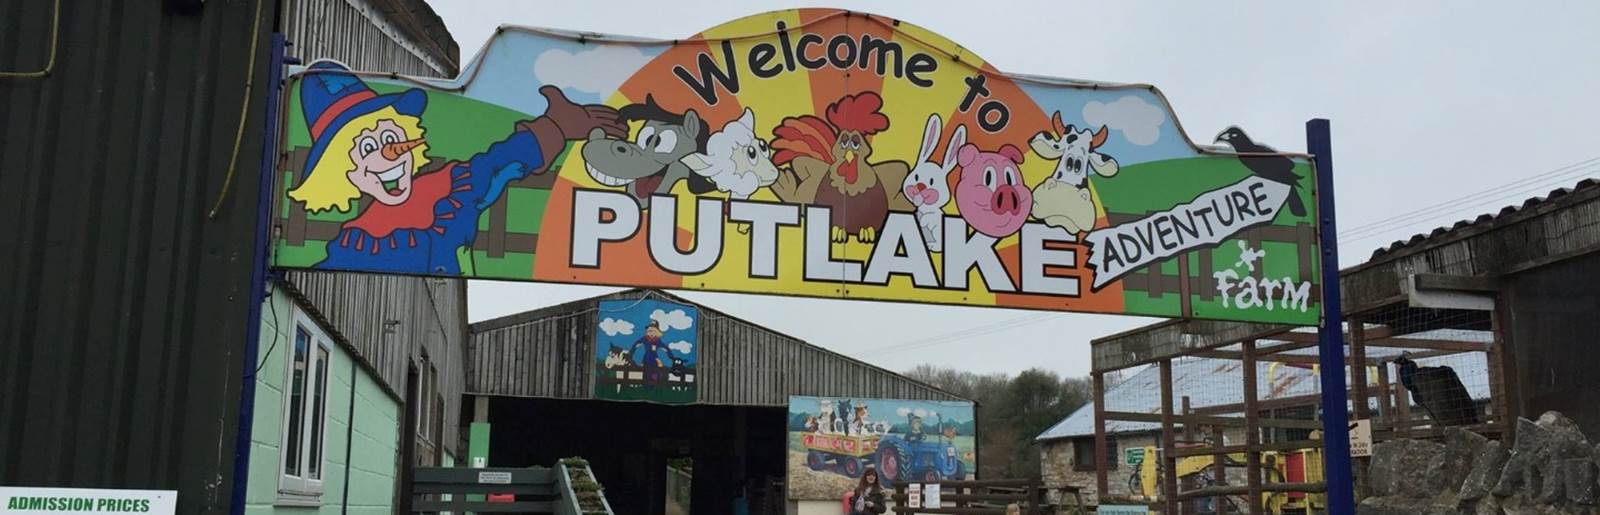 putlake-farm-sign 